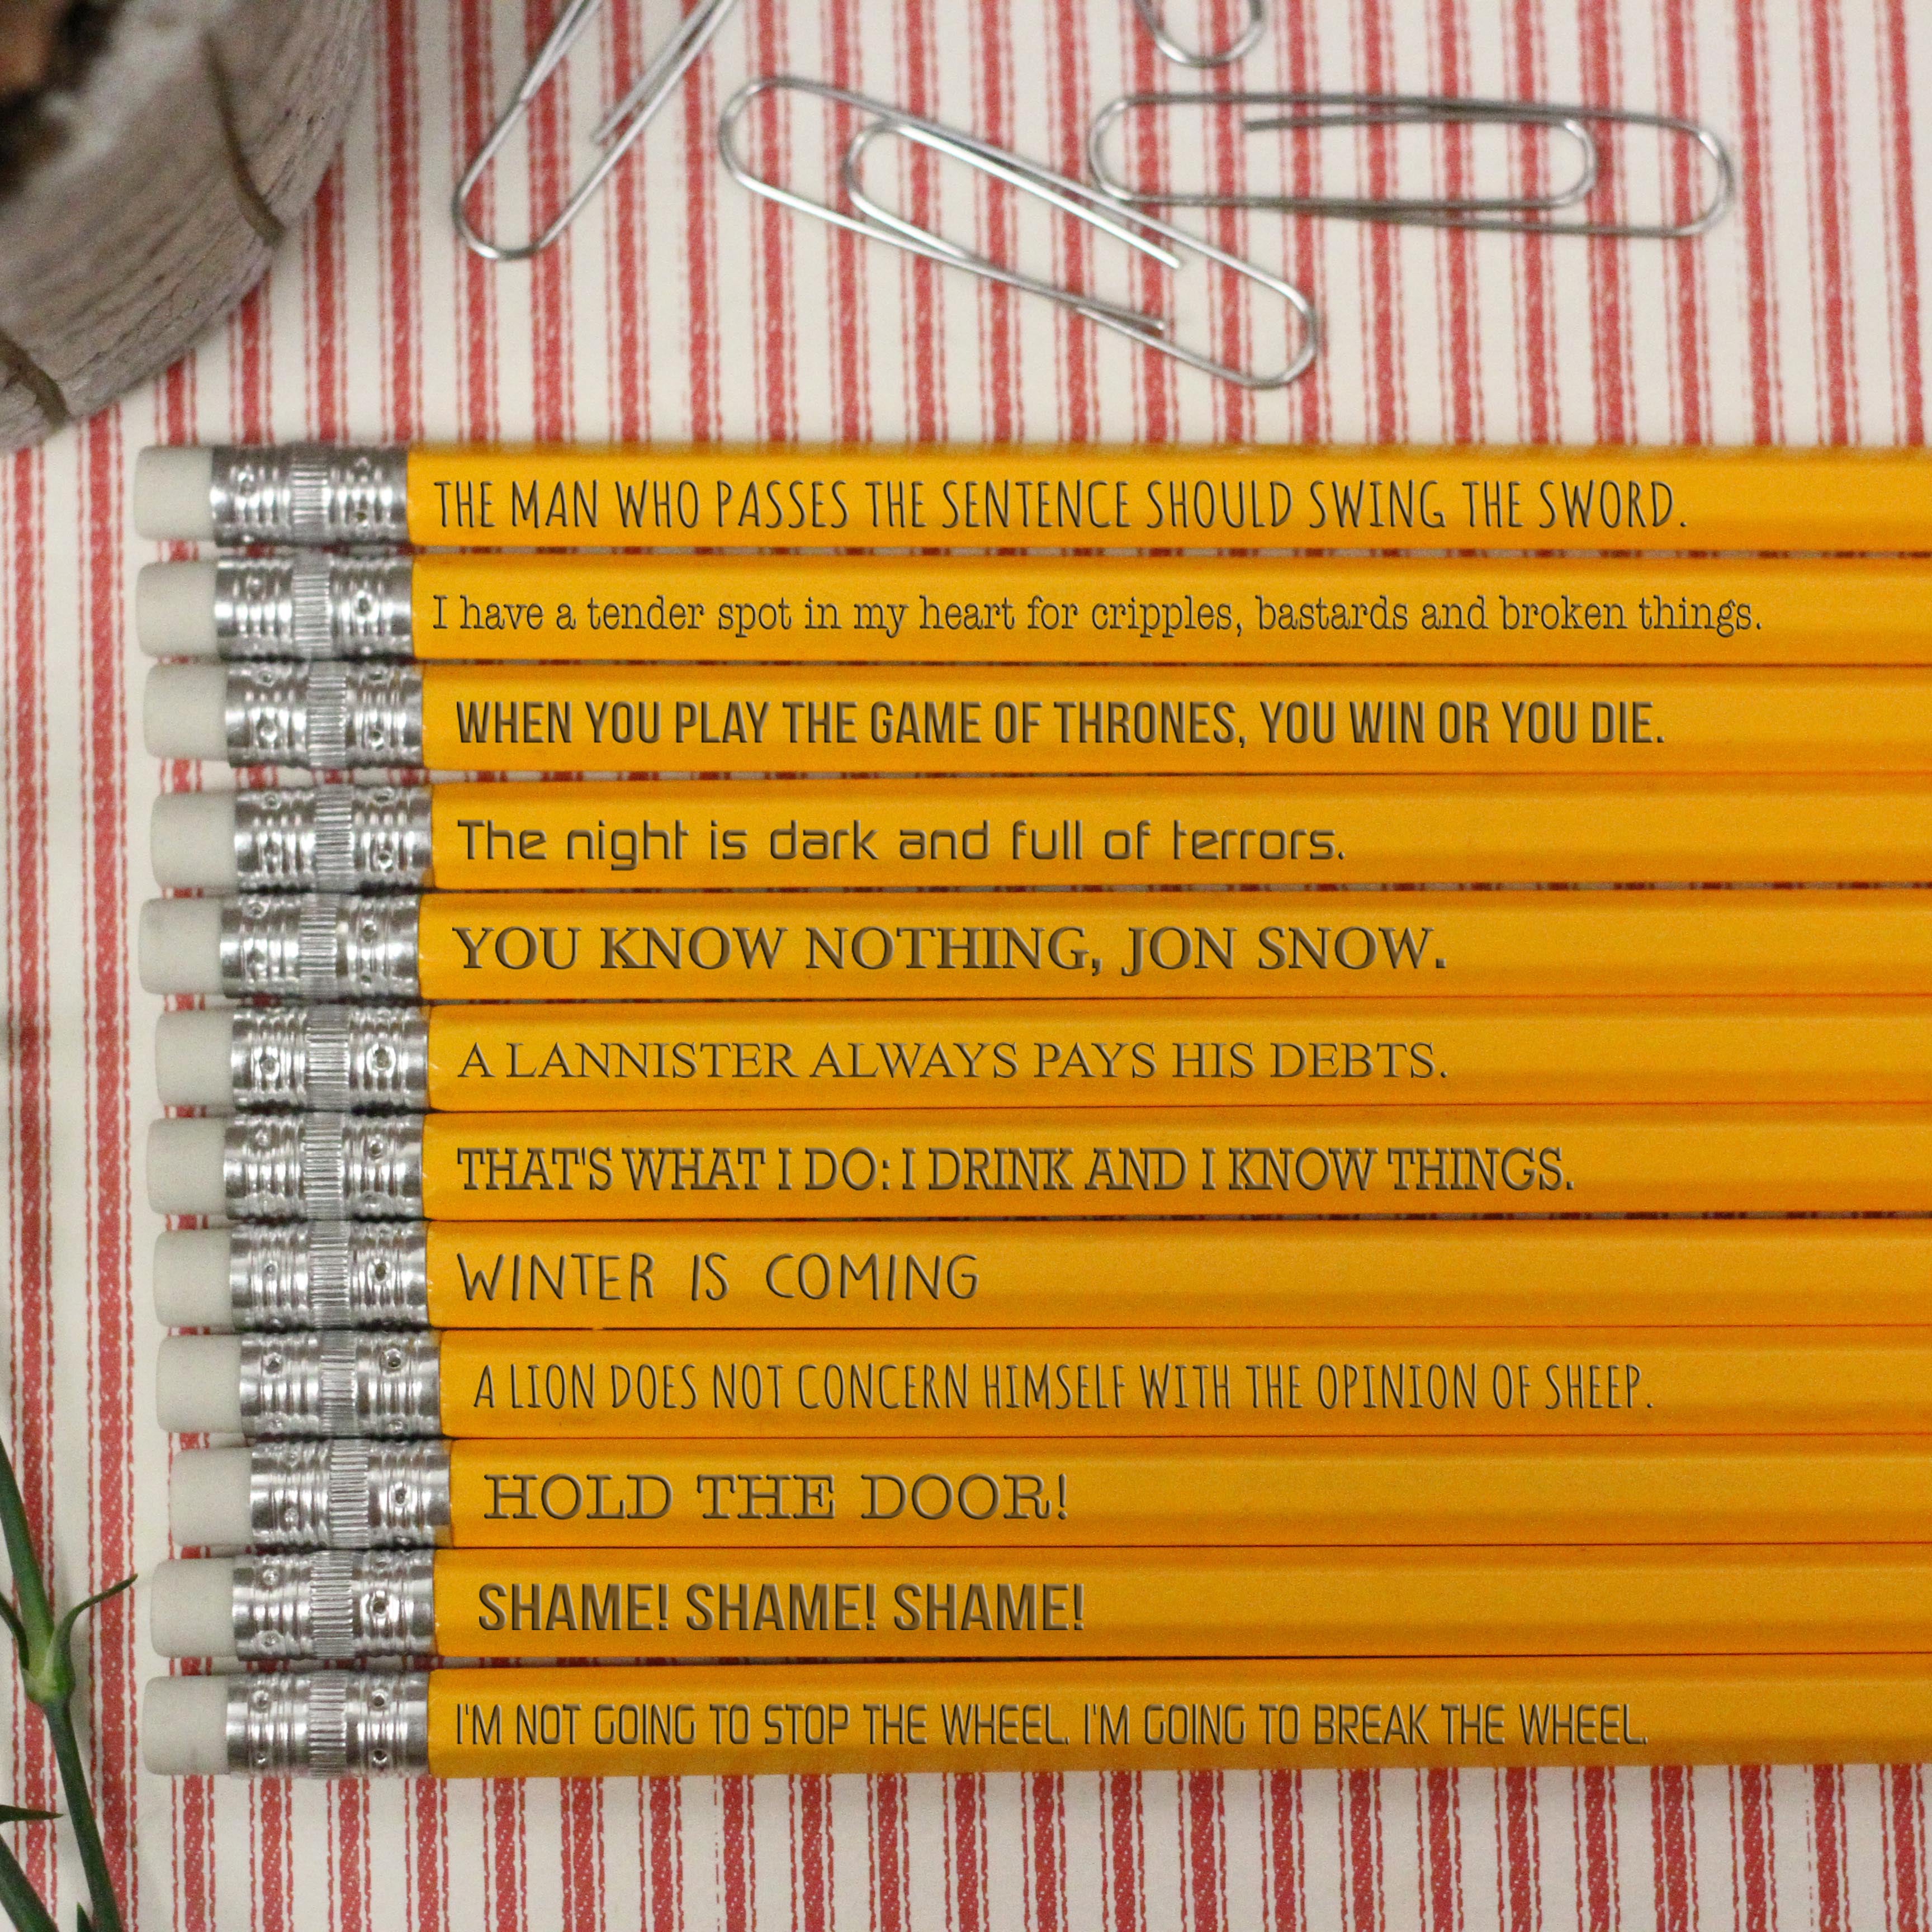 12 Mix Match Engraved Pencil Set, Funny Pencils, Tv Show Quotes